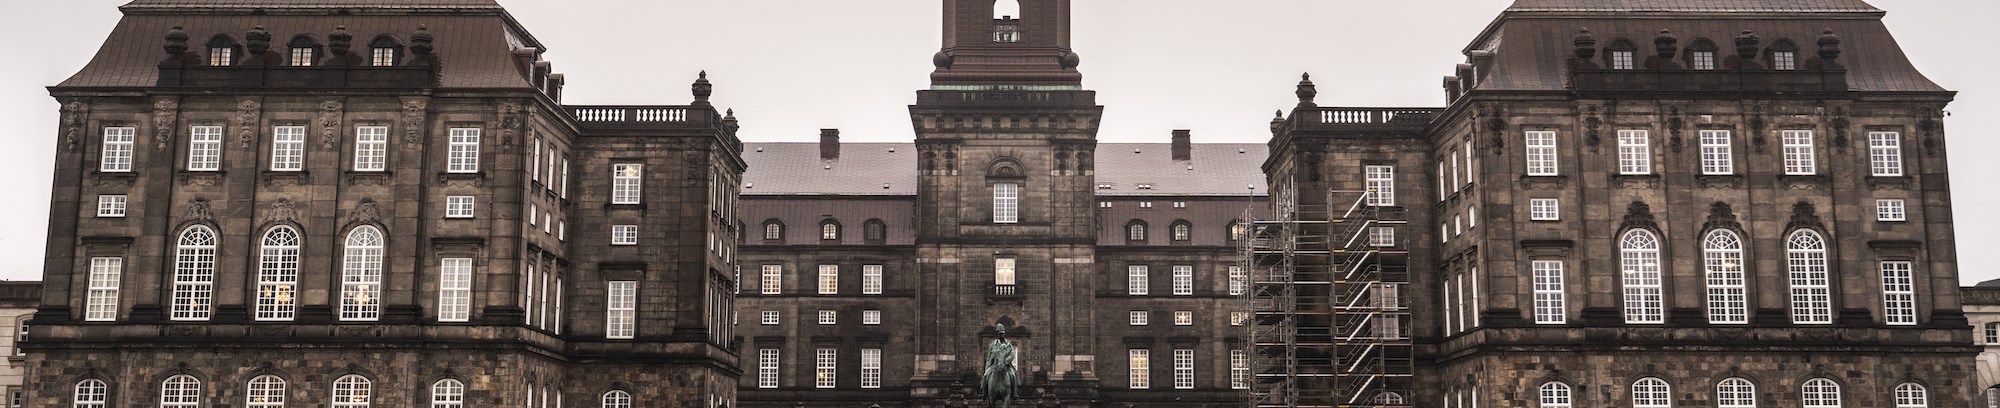 Christiansborg, rundvisning – hos FOF København